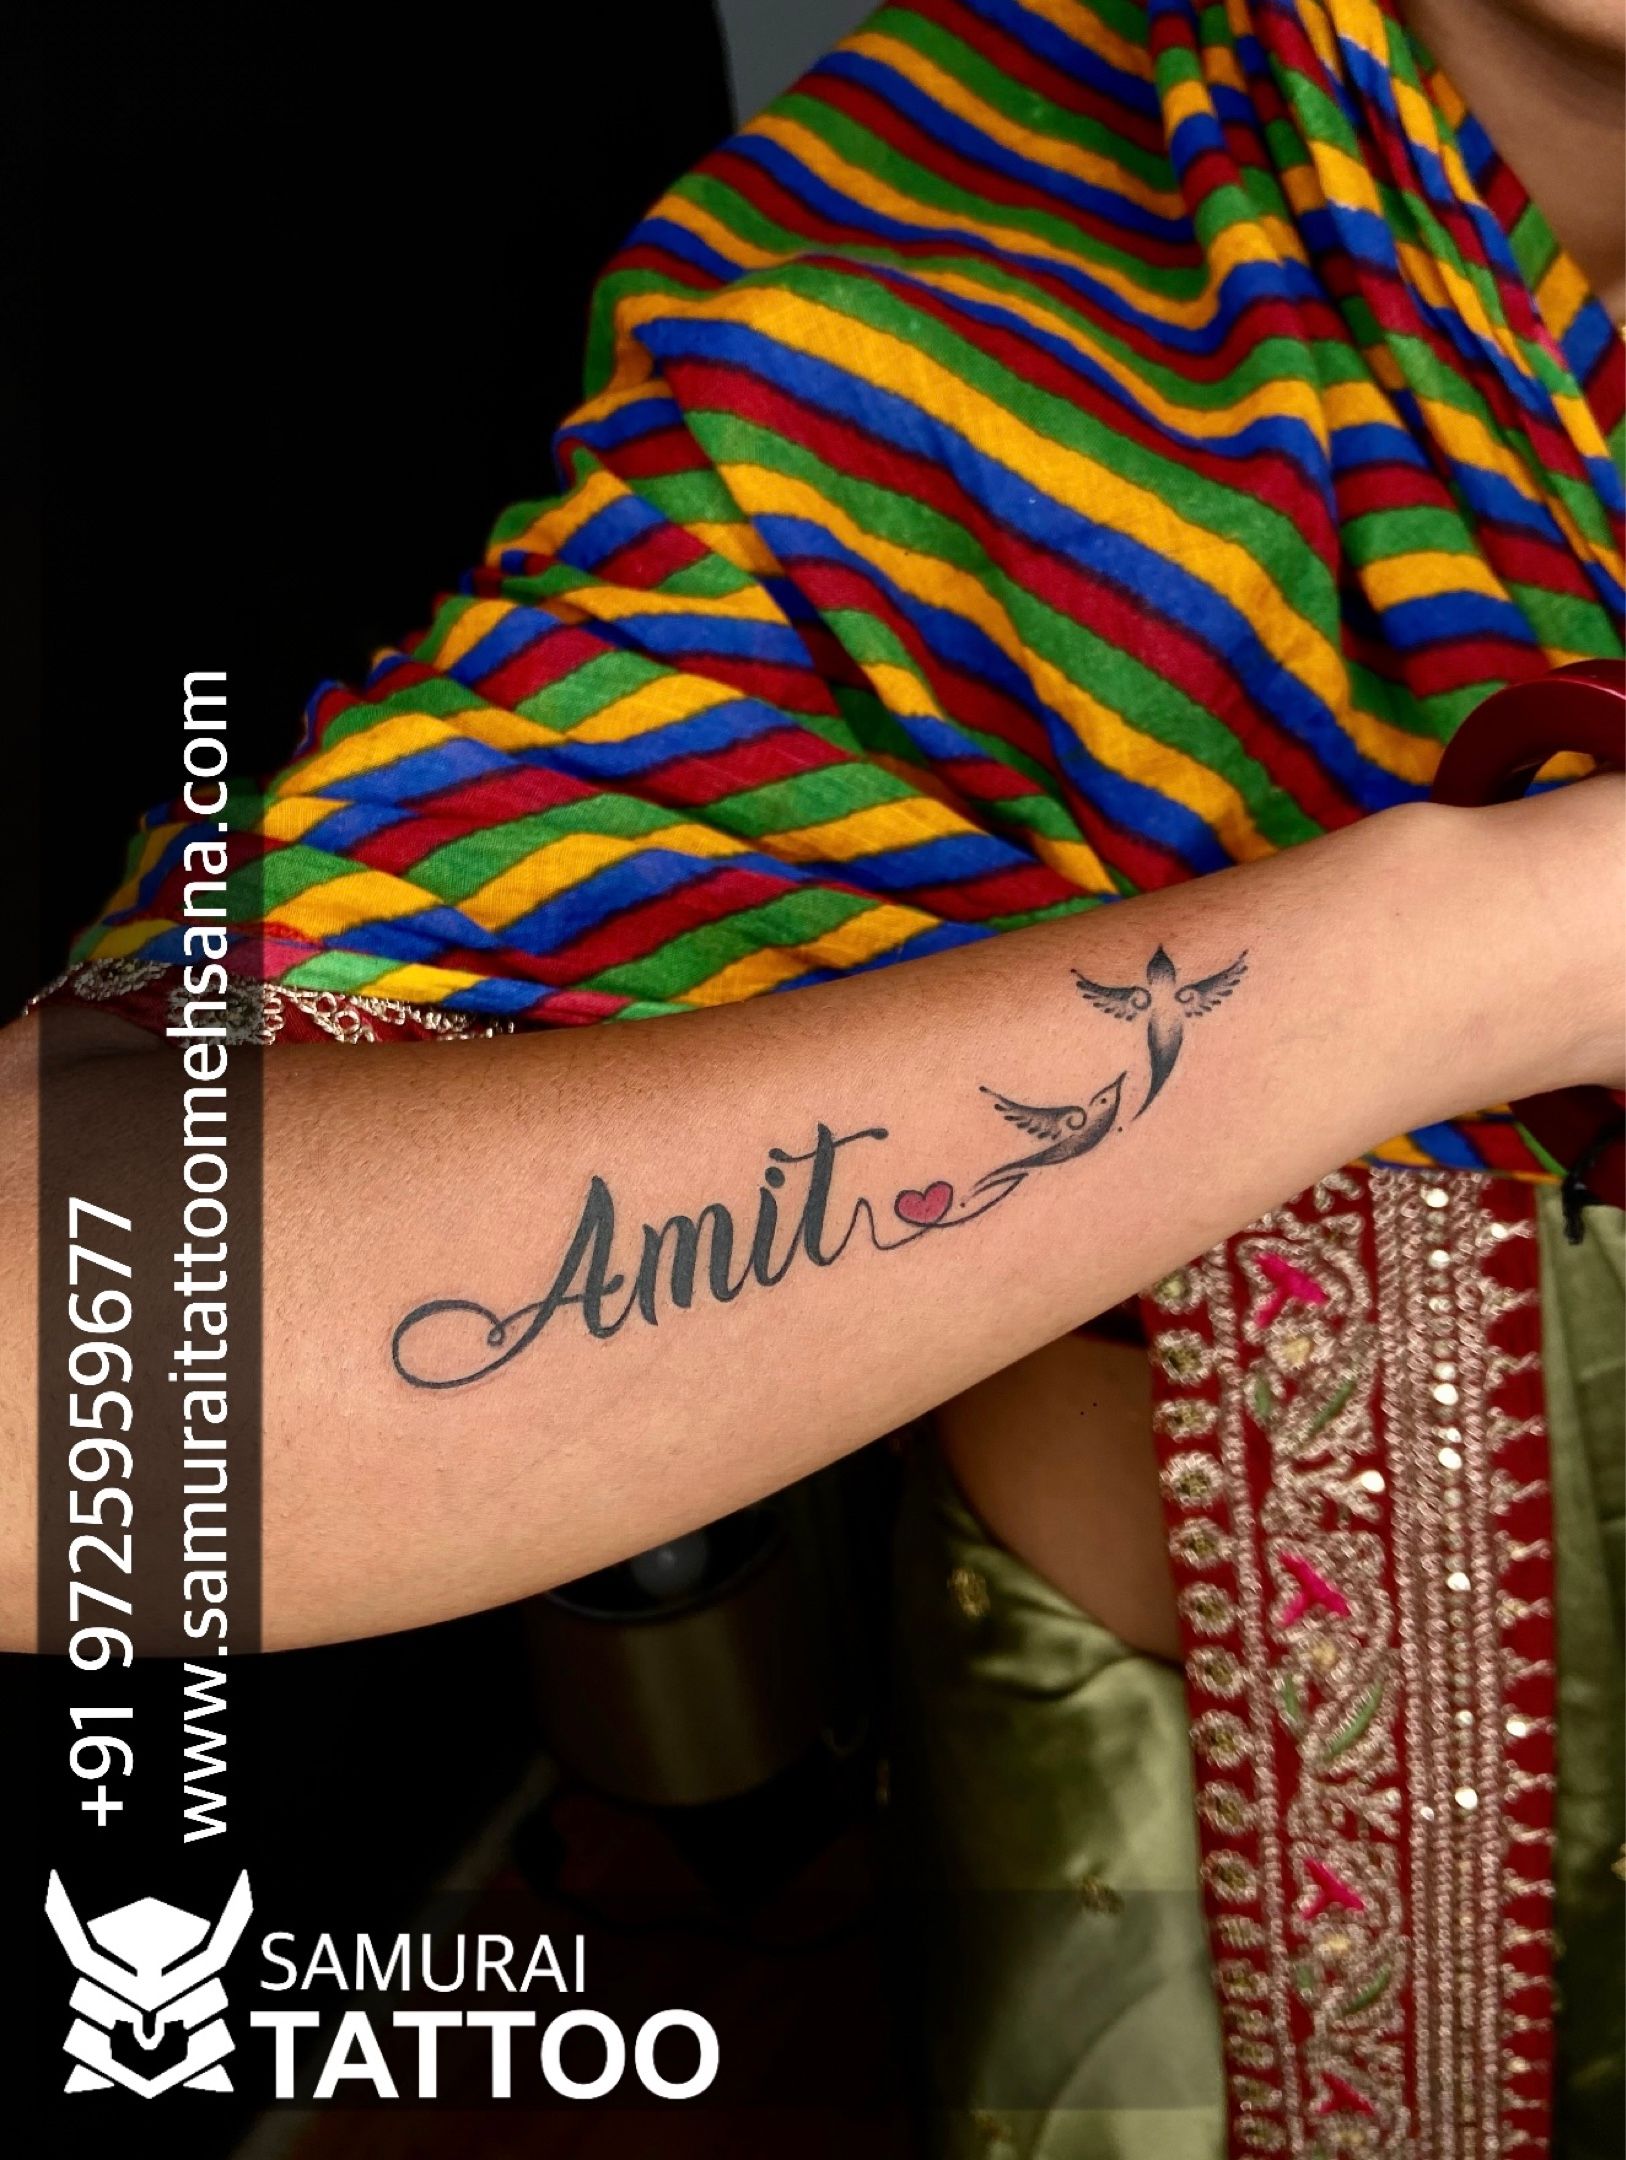 Tattoo uploaded by Vipul Chaudhary  Amit name tattoo Amit tattoo Amit  name tattoo ideas Amit name tattoo design  Tattoodo